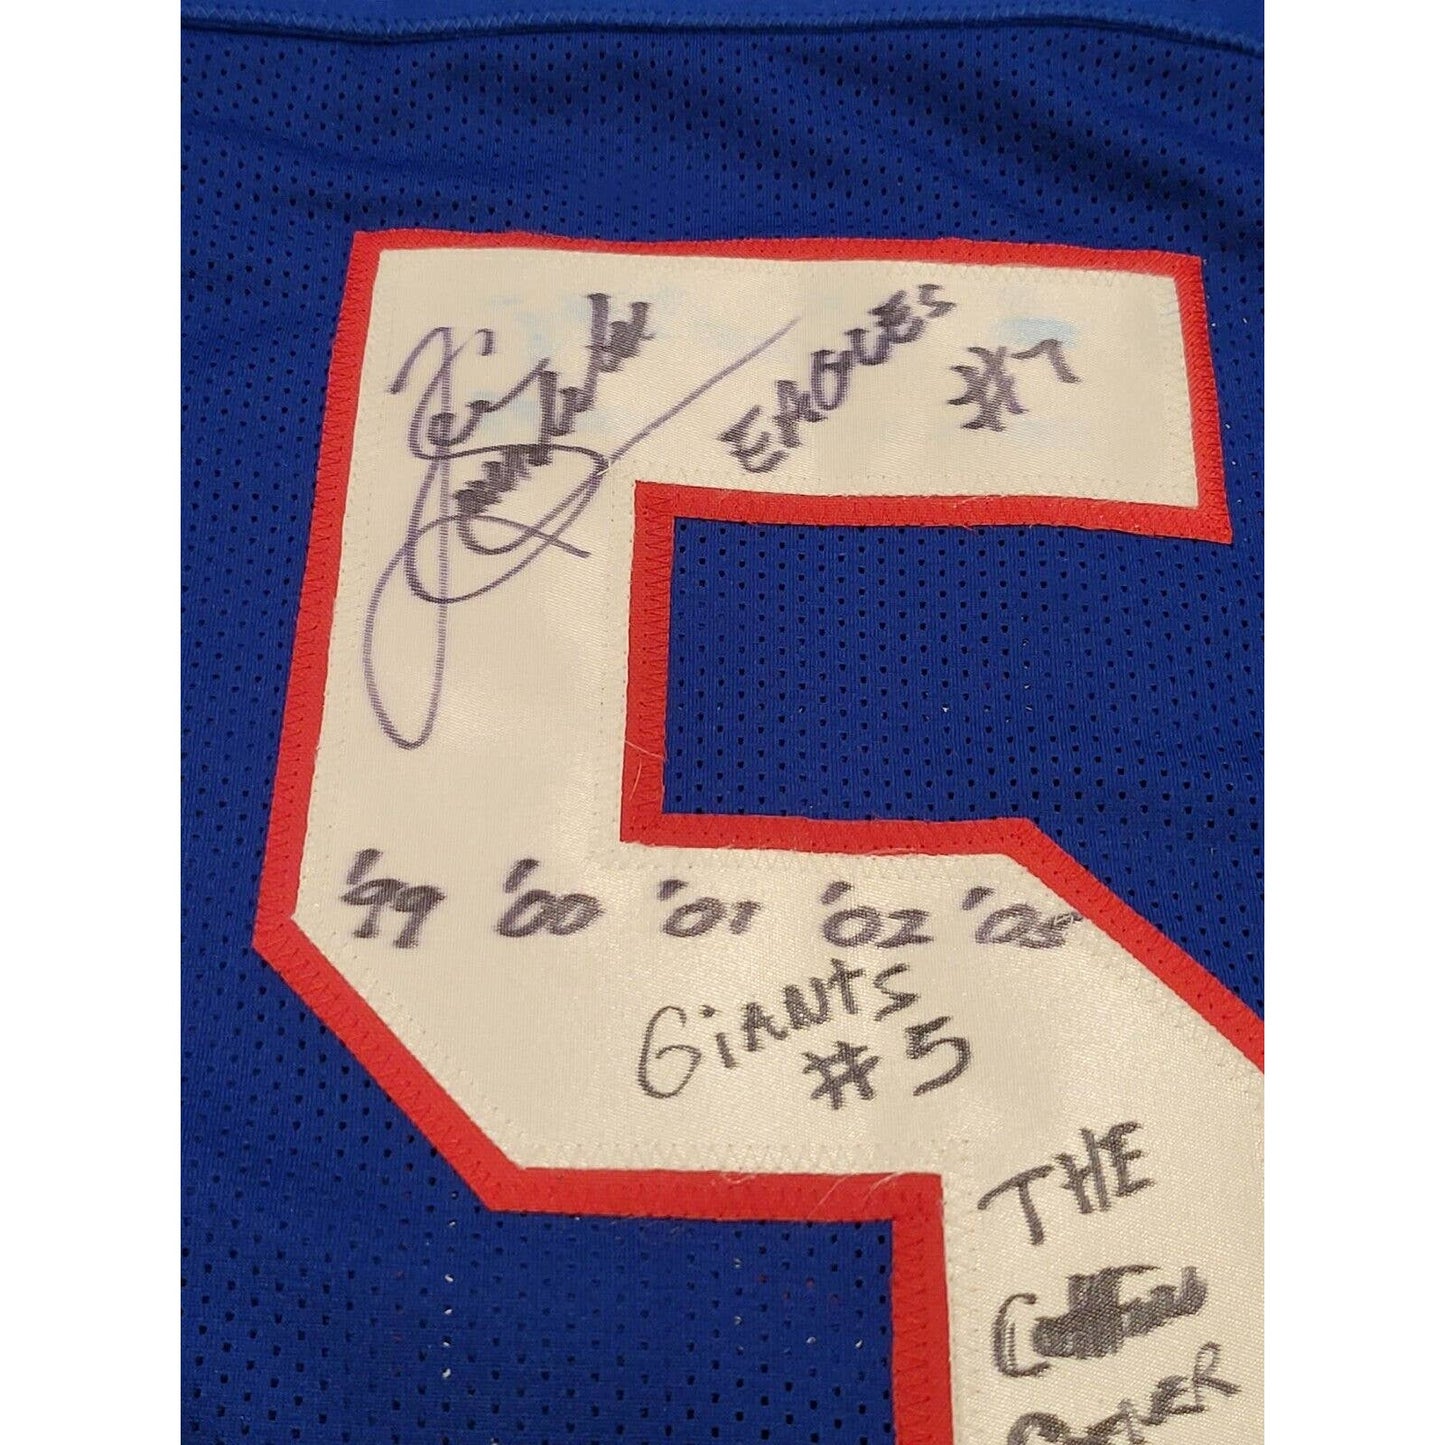 Sean Landeta Autographed/Signed Jersey JSA COA New York Giants - TreasuresEvolved